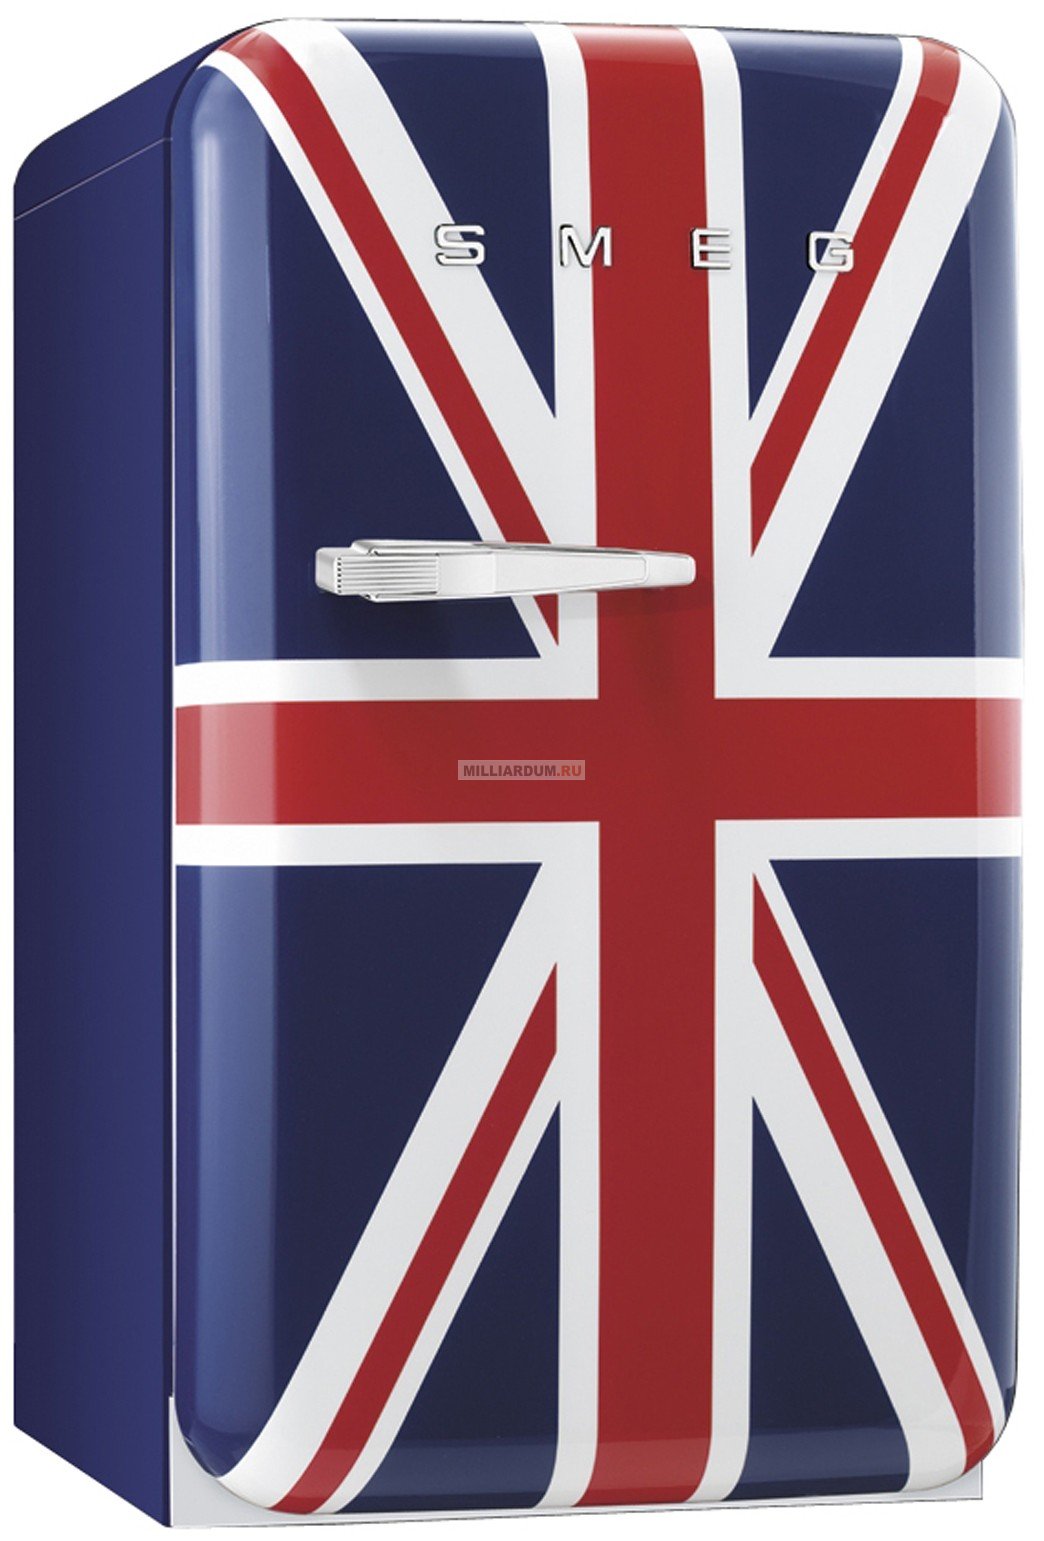 Холодильник SMEG с рисунком британского флага